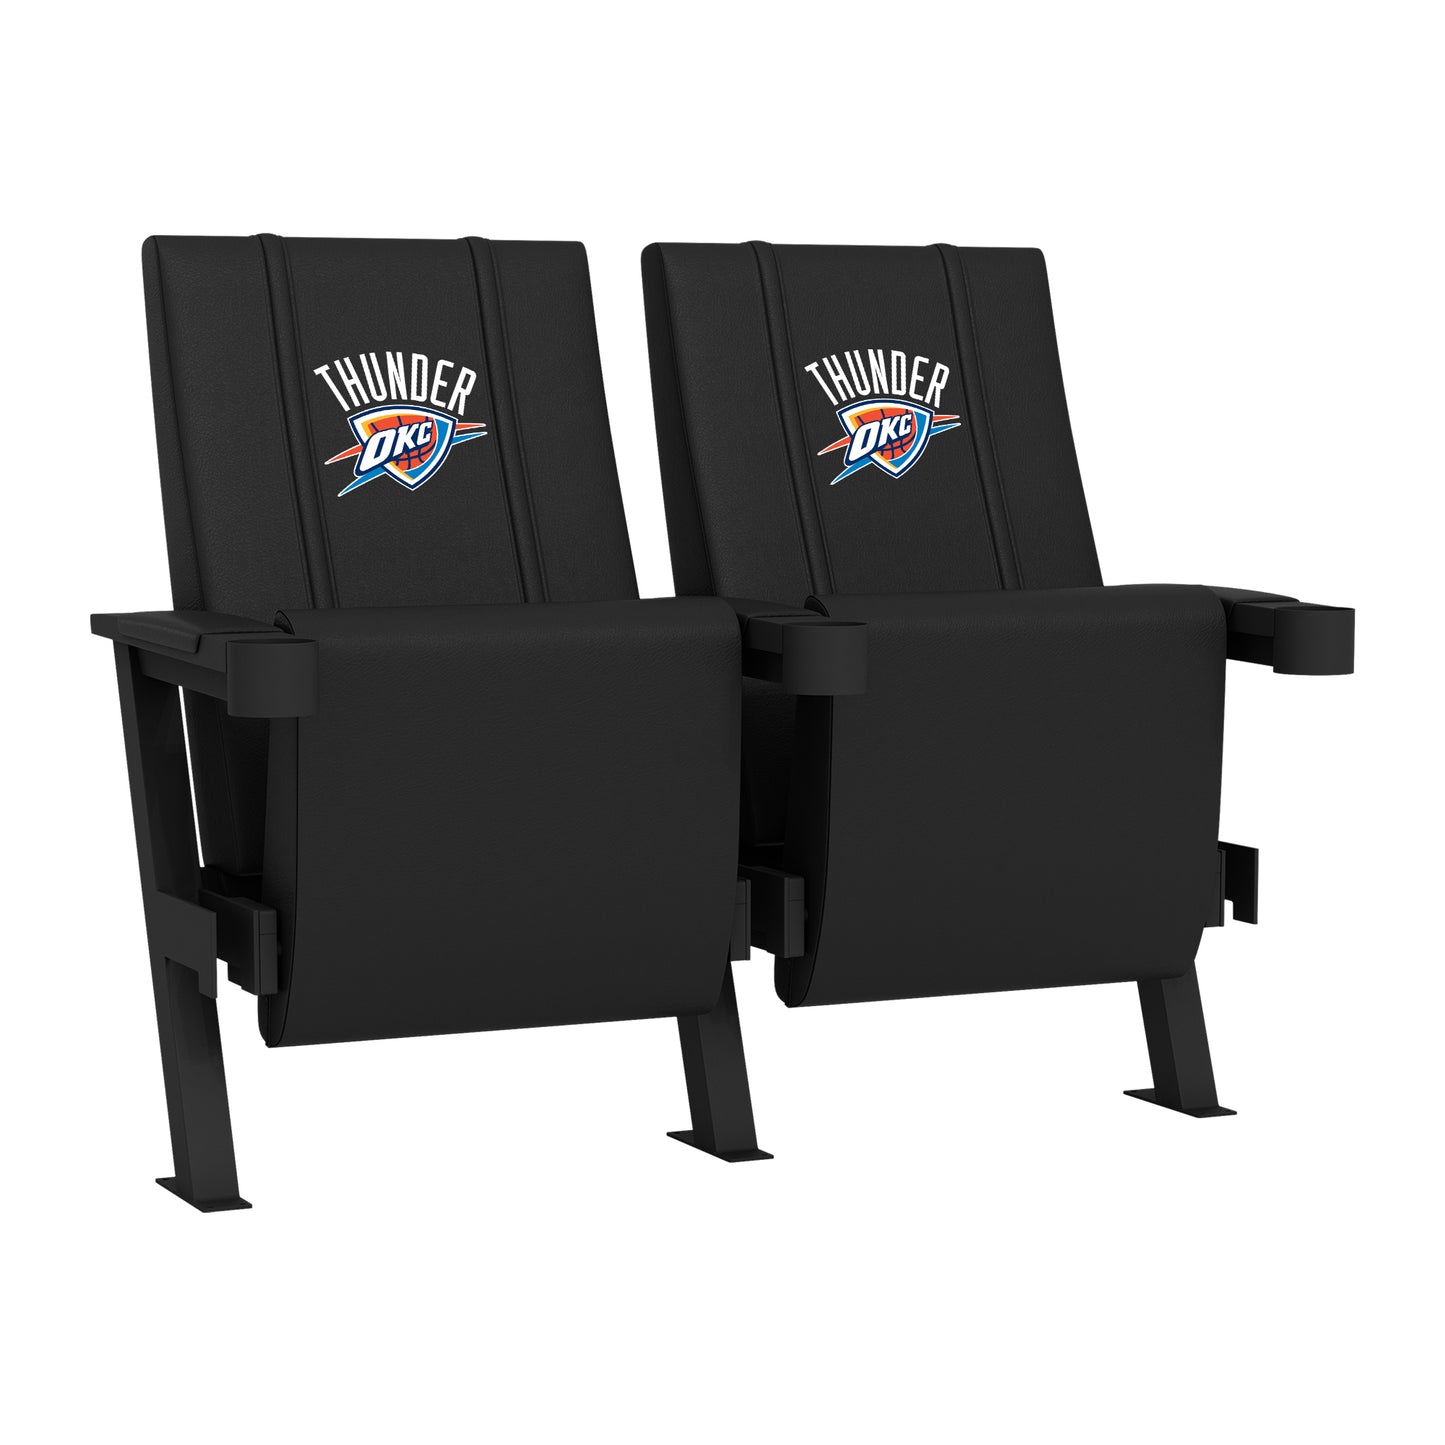 SuiteMax 3.5 VIP Seats with Oklahoma City Thunder Logo